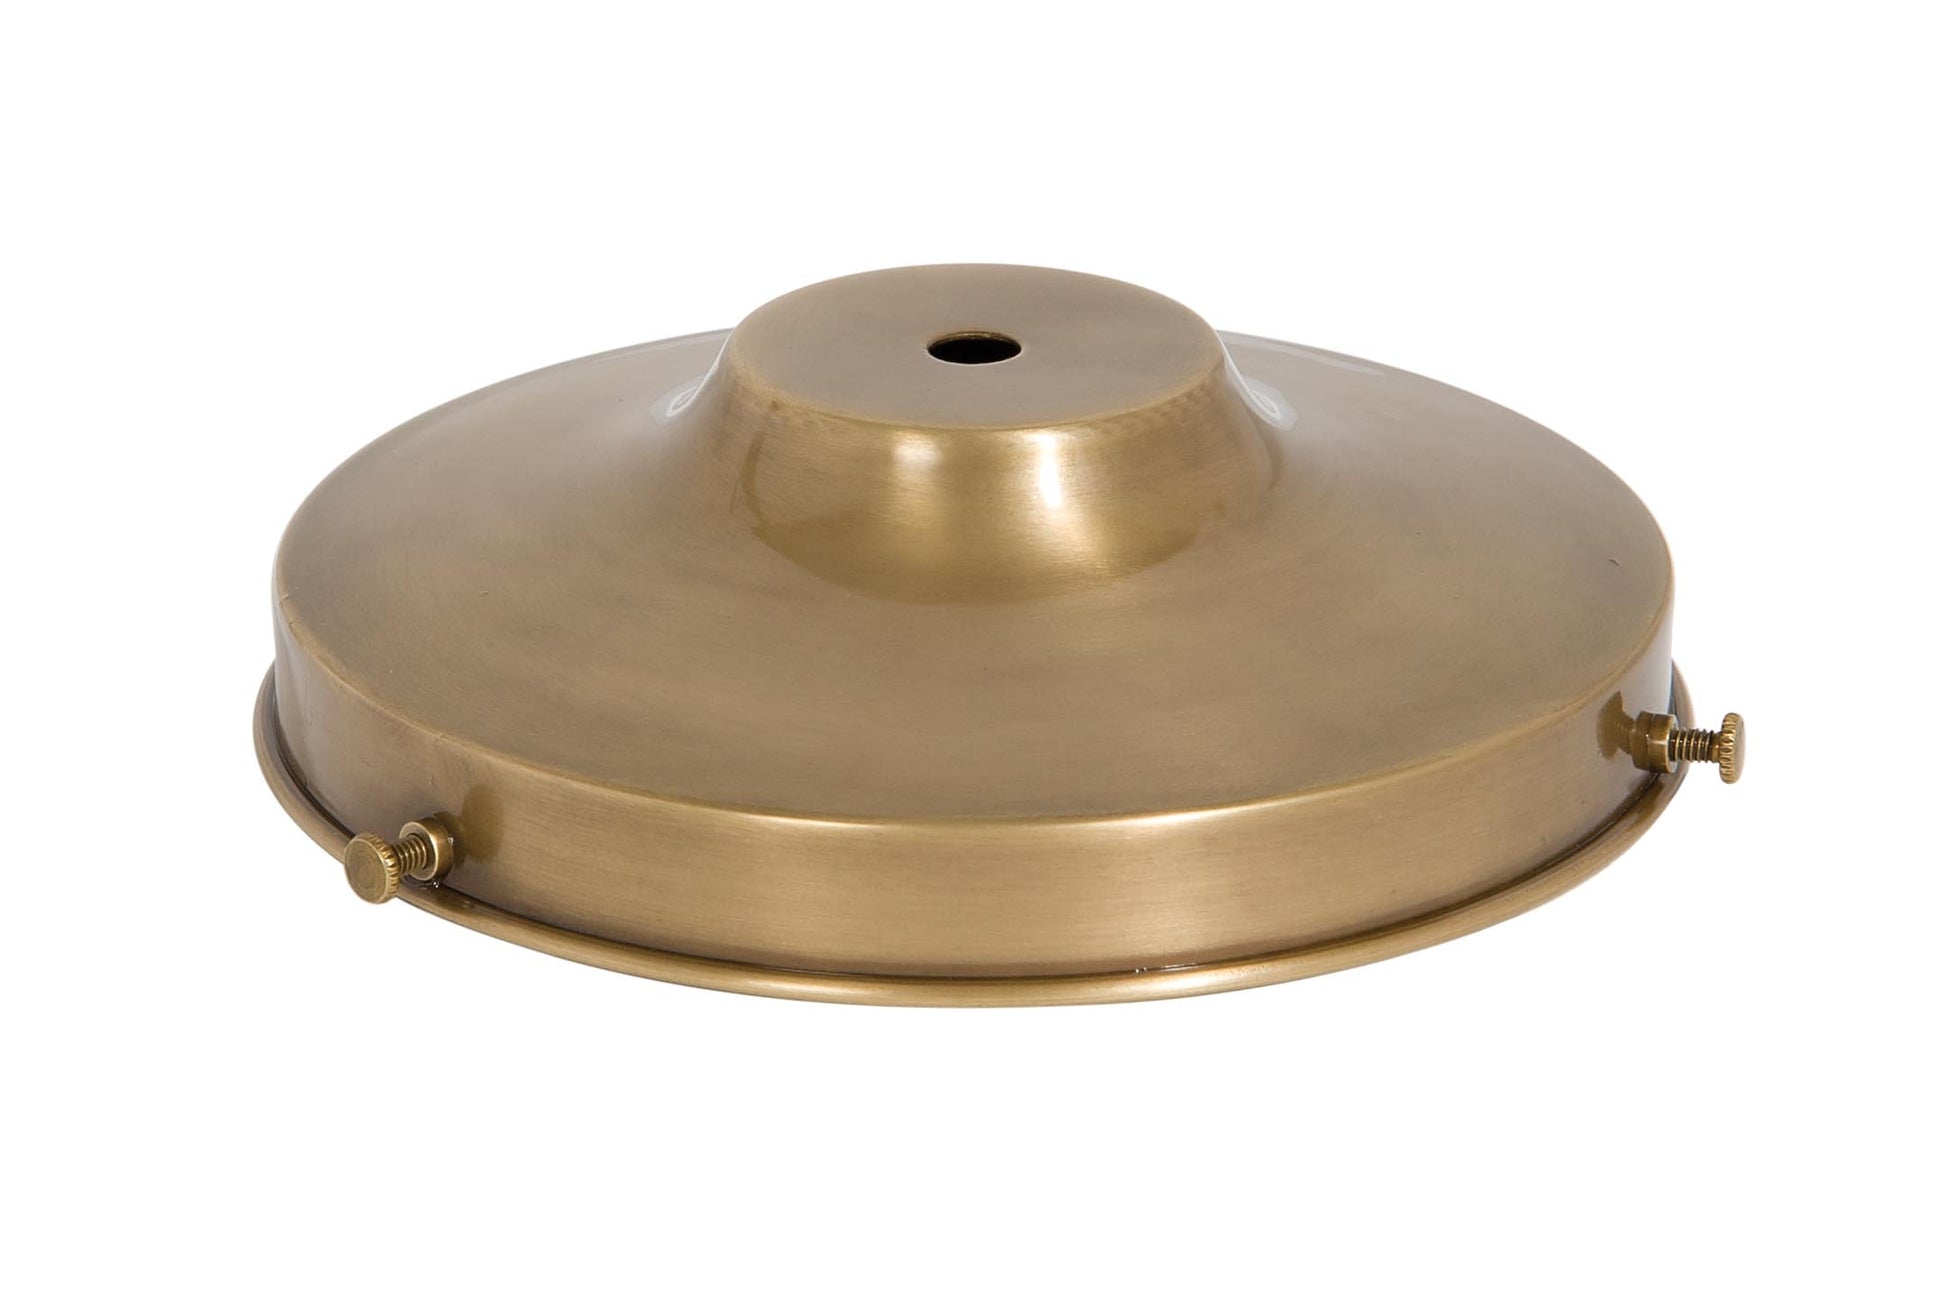  6 Inch Fitter Antique Brass Finish Brass Lamp Shade Holder 